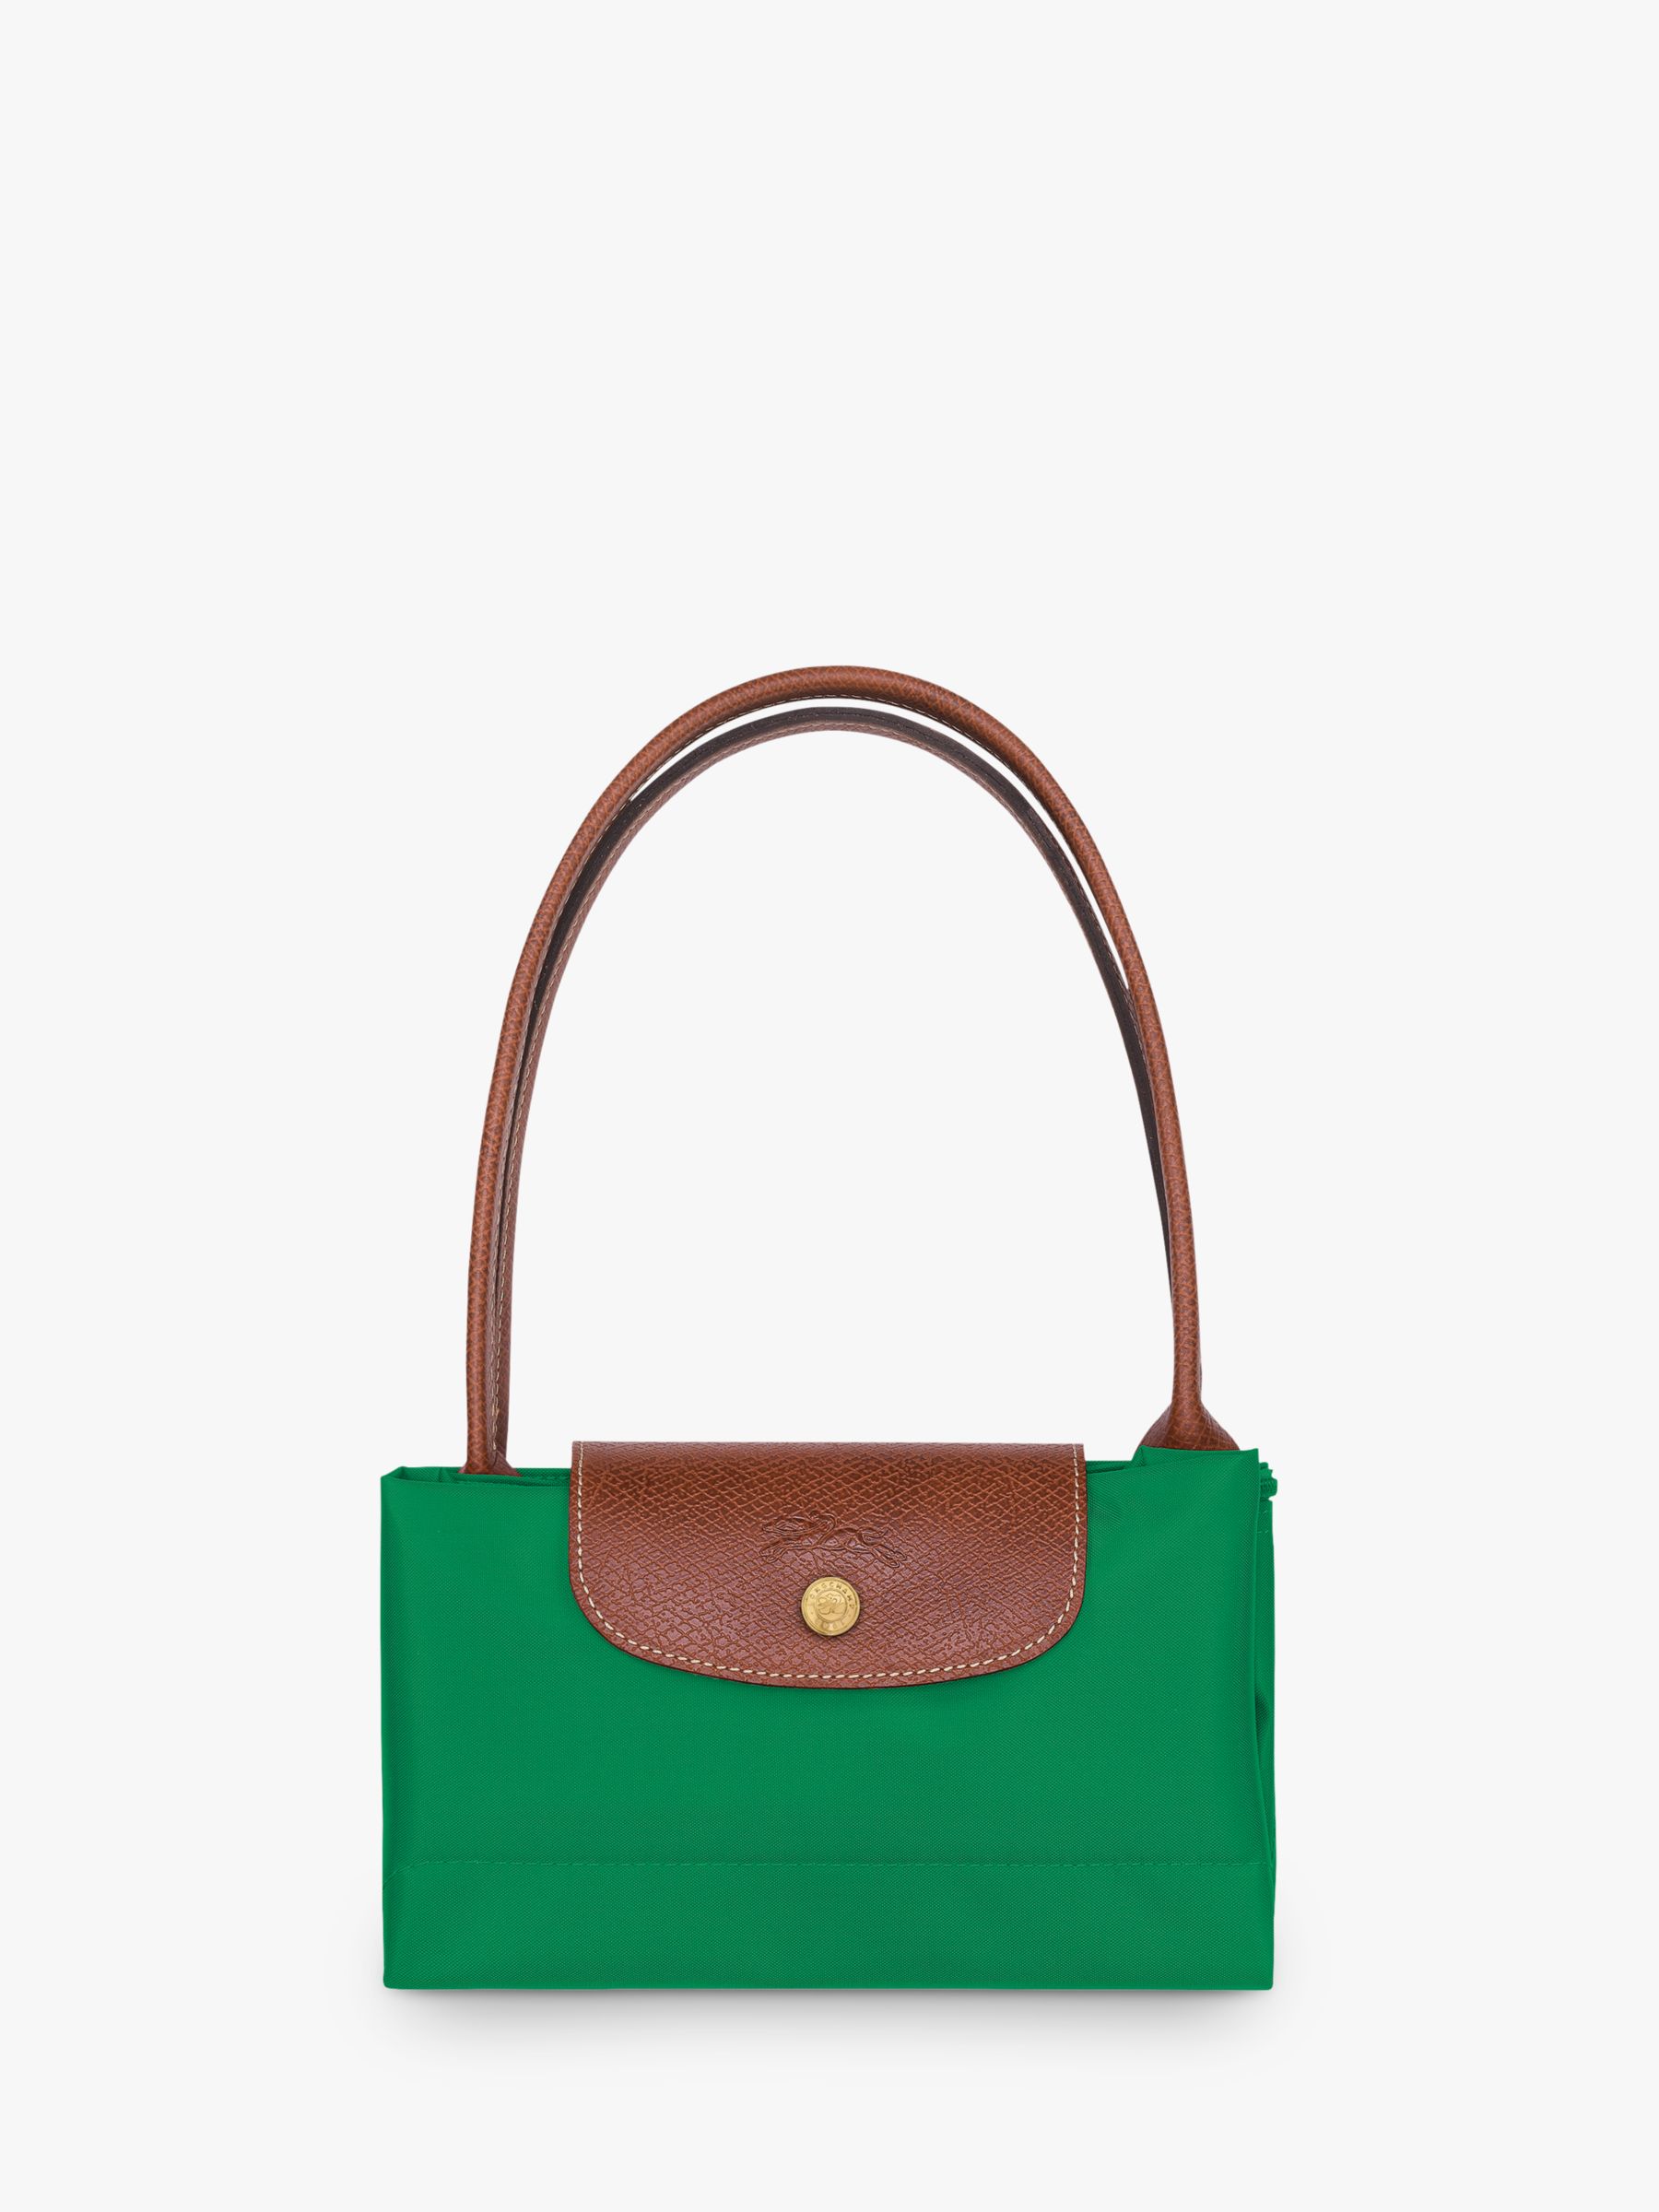 Longchamp Le Pliage Original Tote Bag, Green